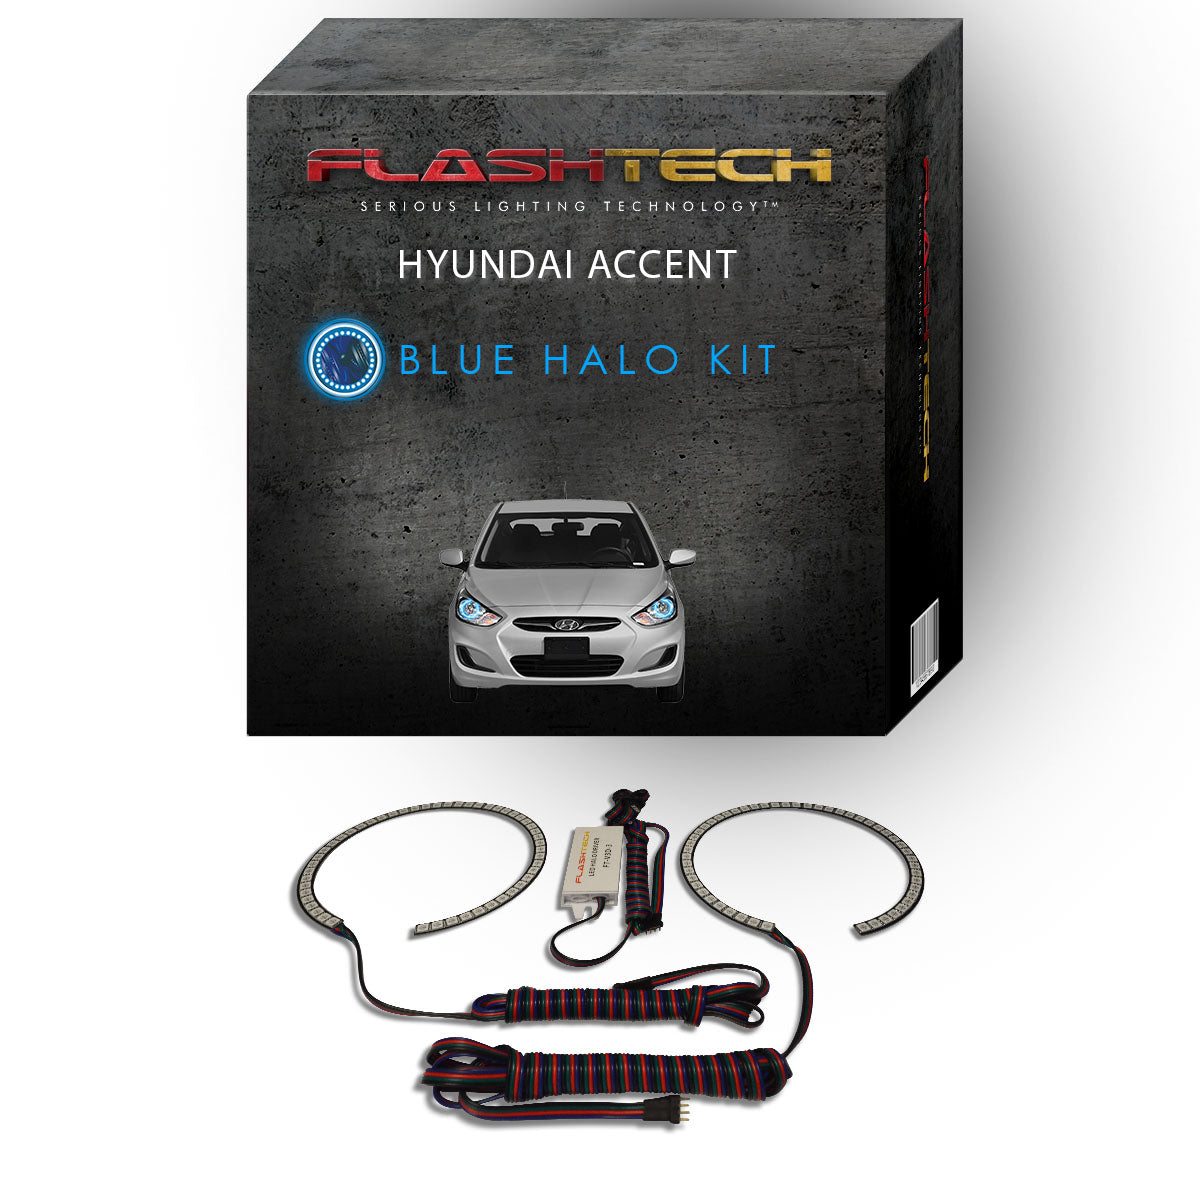 Hyundai-Accent-2012, 2013, 2014-LED-Halo-Headlights-RGB-No Remote-HY-AC1214-V3H